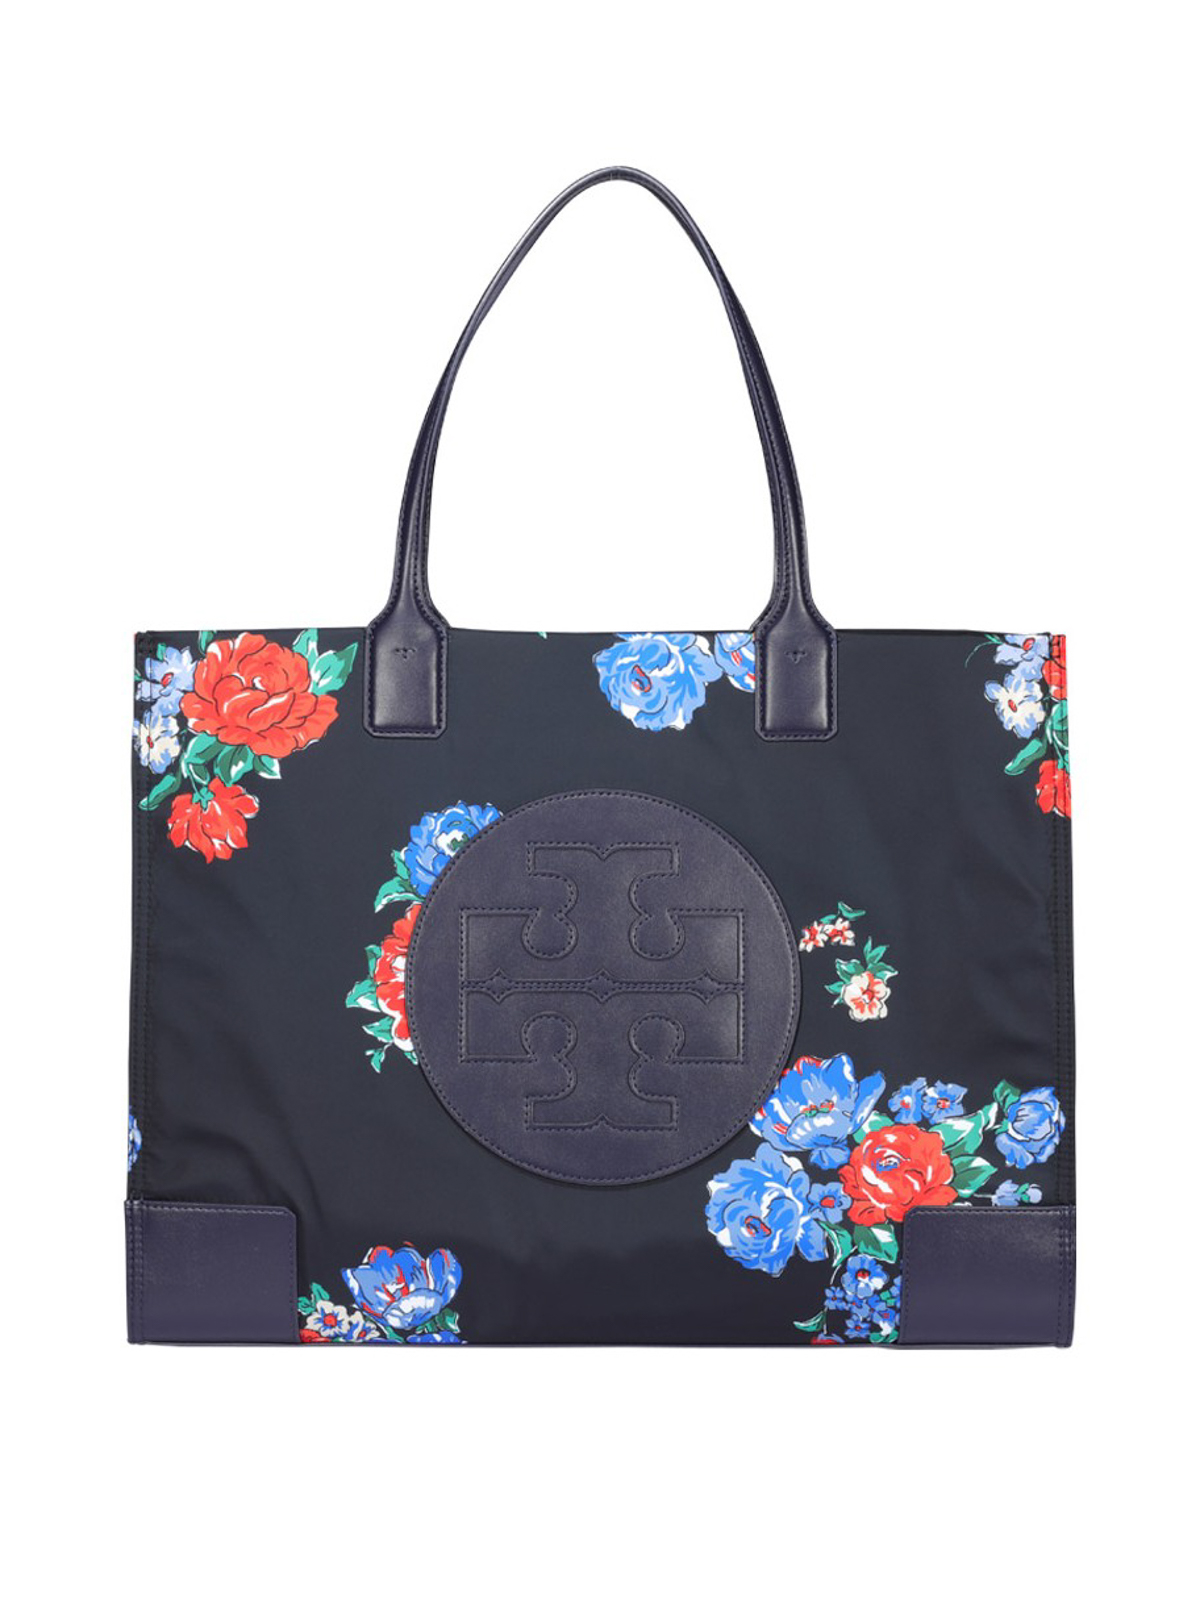 Totes bags Tory Burch - Ella floral tote - 64615966 | Shop online at iKRIX